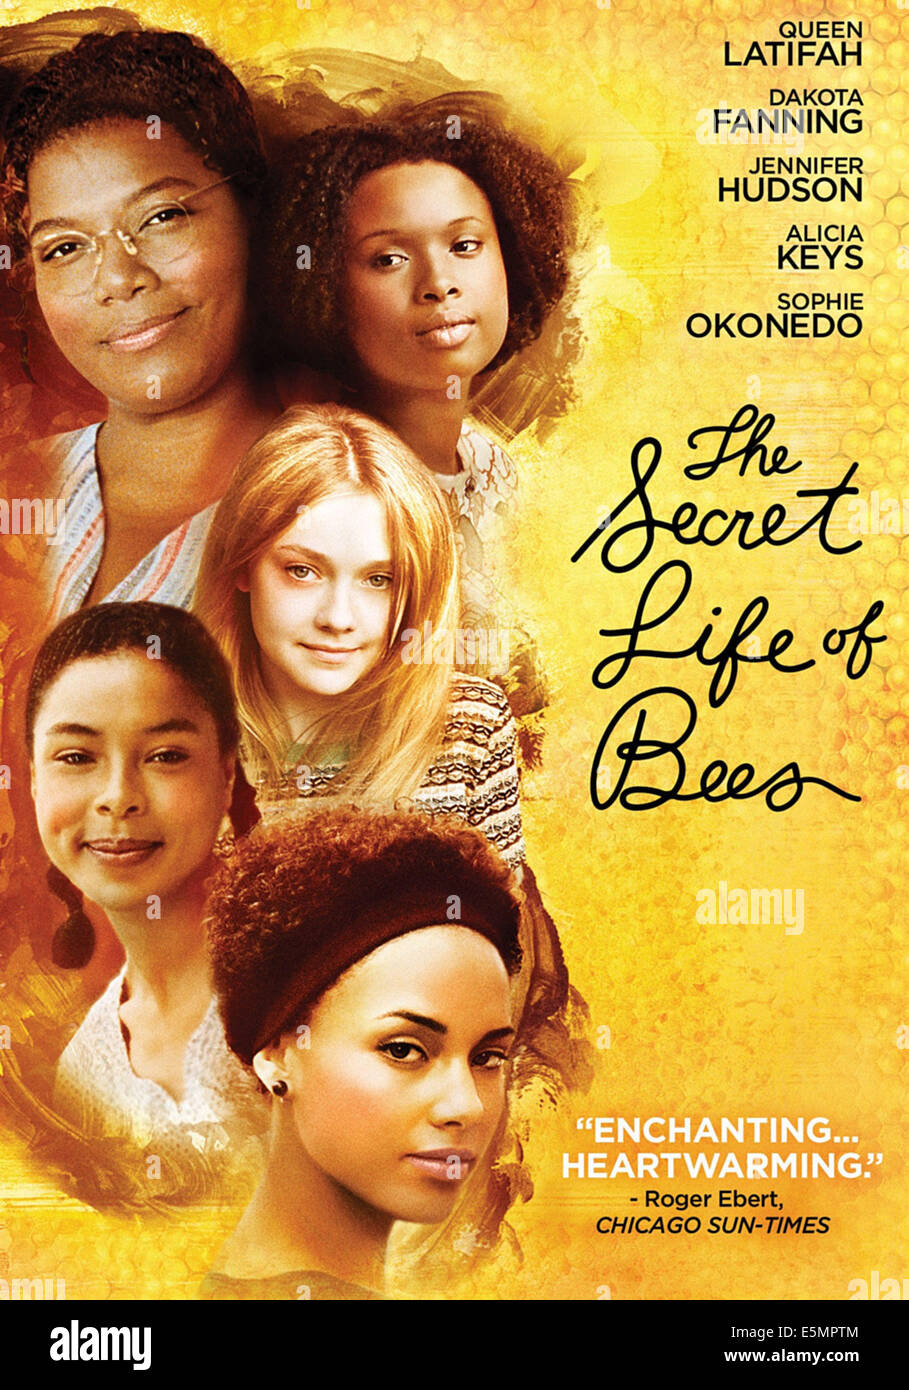 THE SECRET LIFE OF BEES, top to bottom: Queen Latifah, Jennifer Hudson, Dakota Fanning, Sophie Okonedo, Alicia Keys, 2008. TM Stock Photo